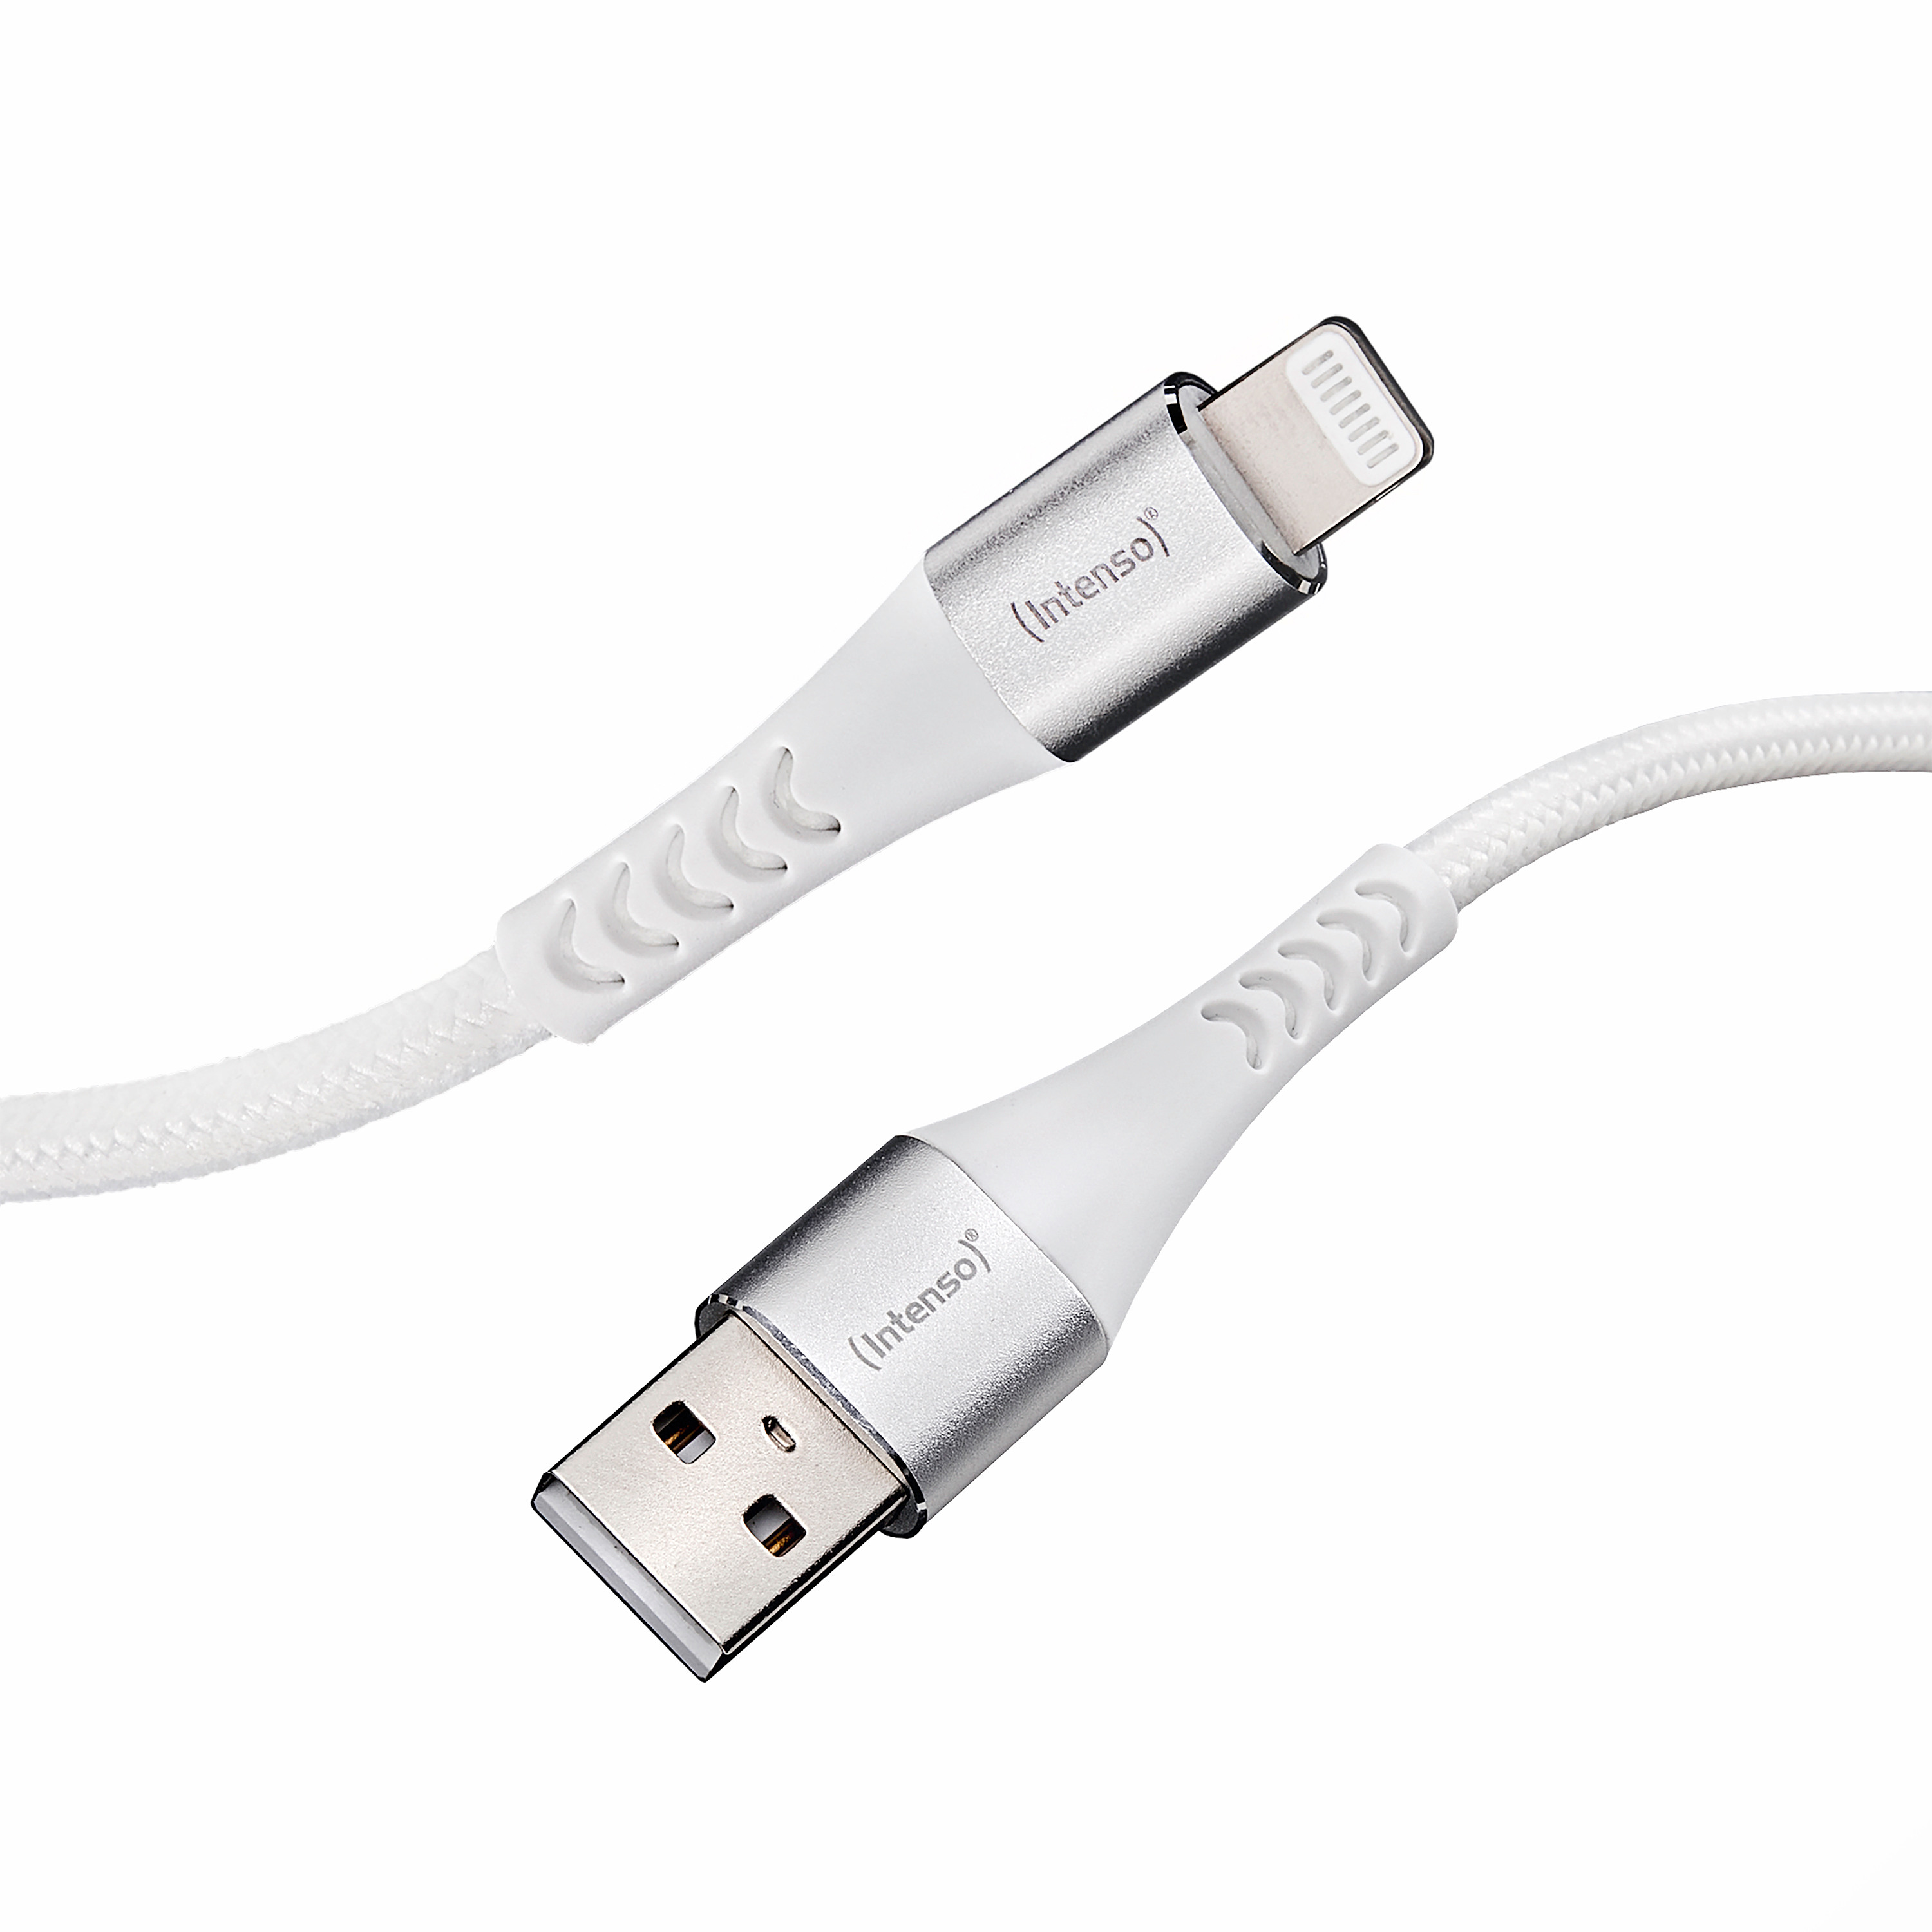 INTENSO Cable USB-C to Lightning 7902002 1.5 m, Nylon white